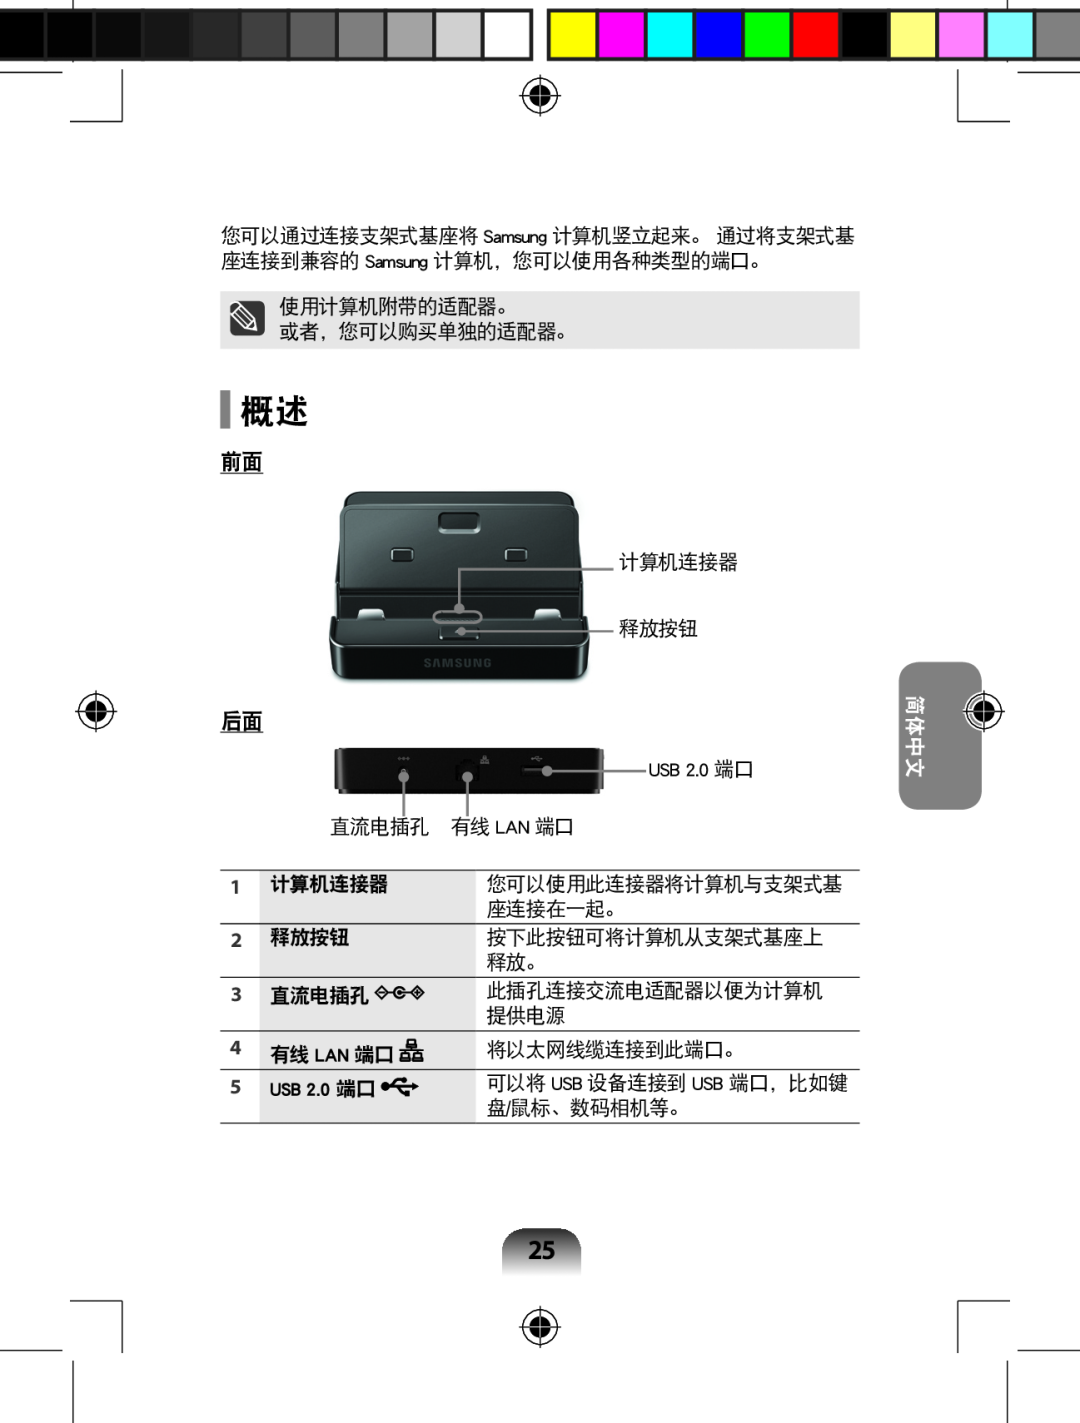 Samsung AA-RD7NMKD/US, AARD7NSDOUS manual 简体中文 